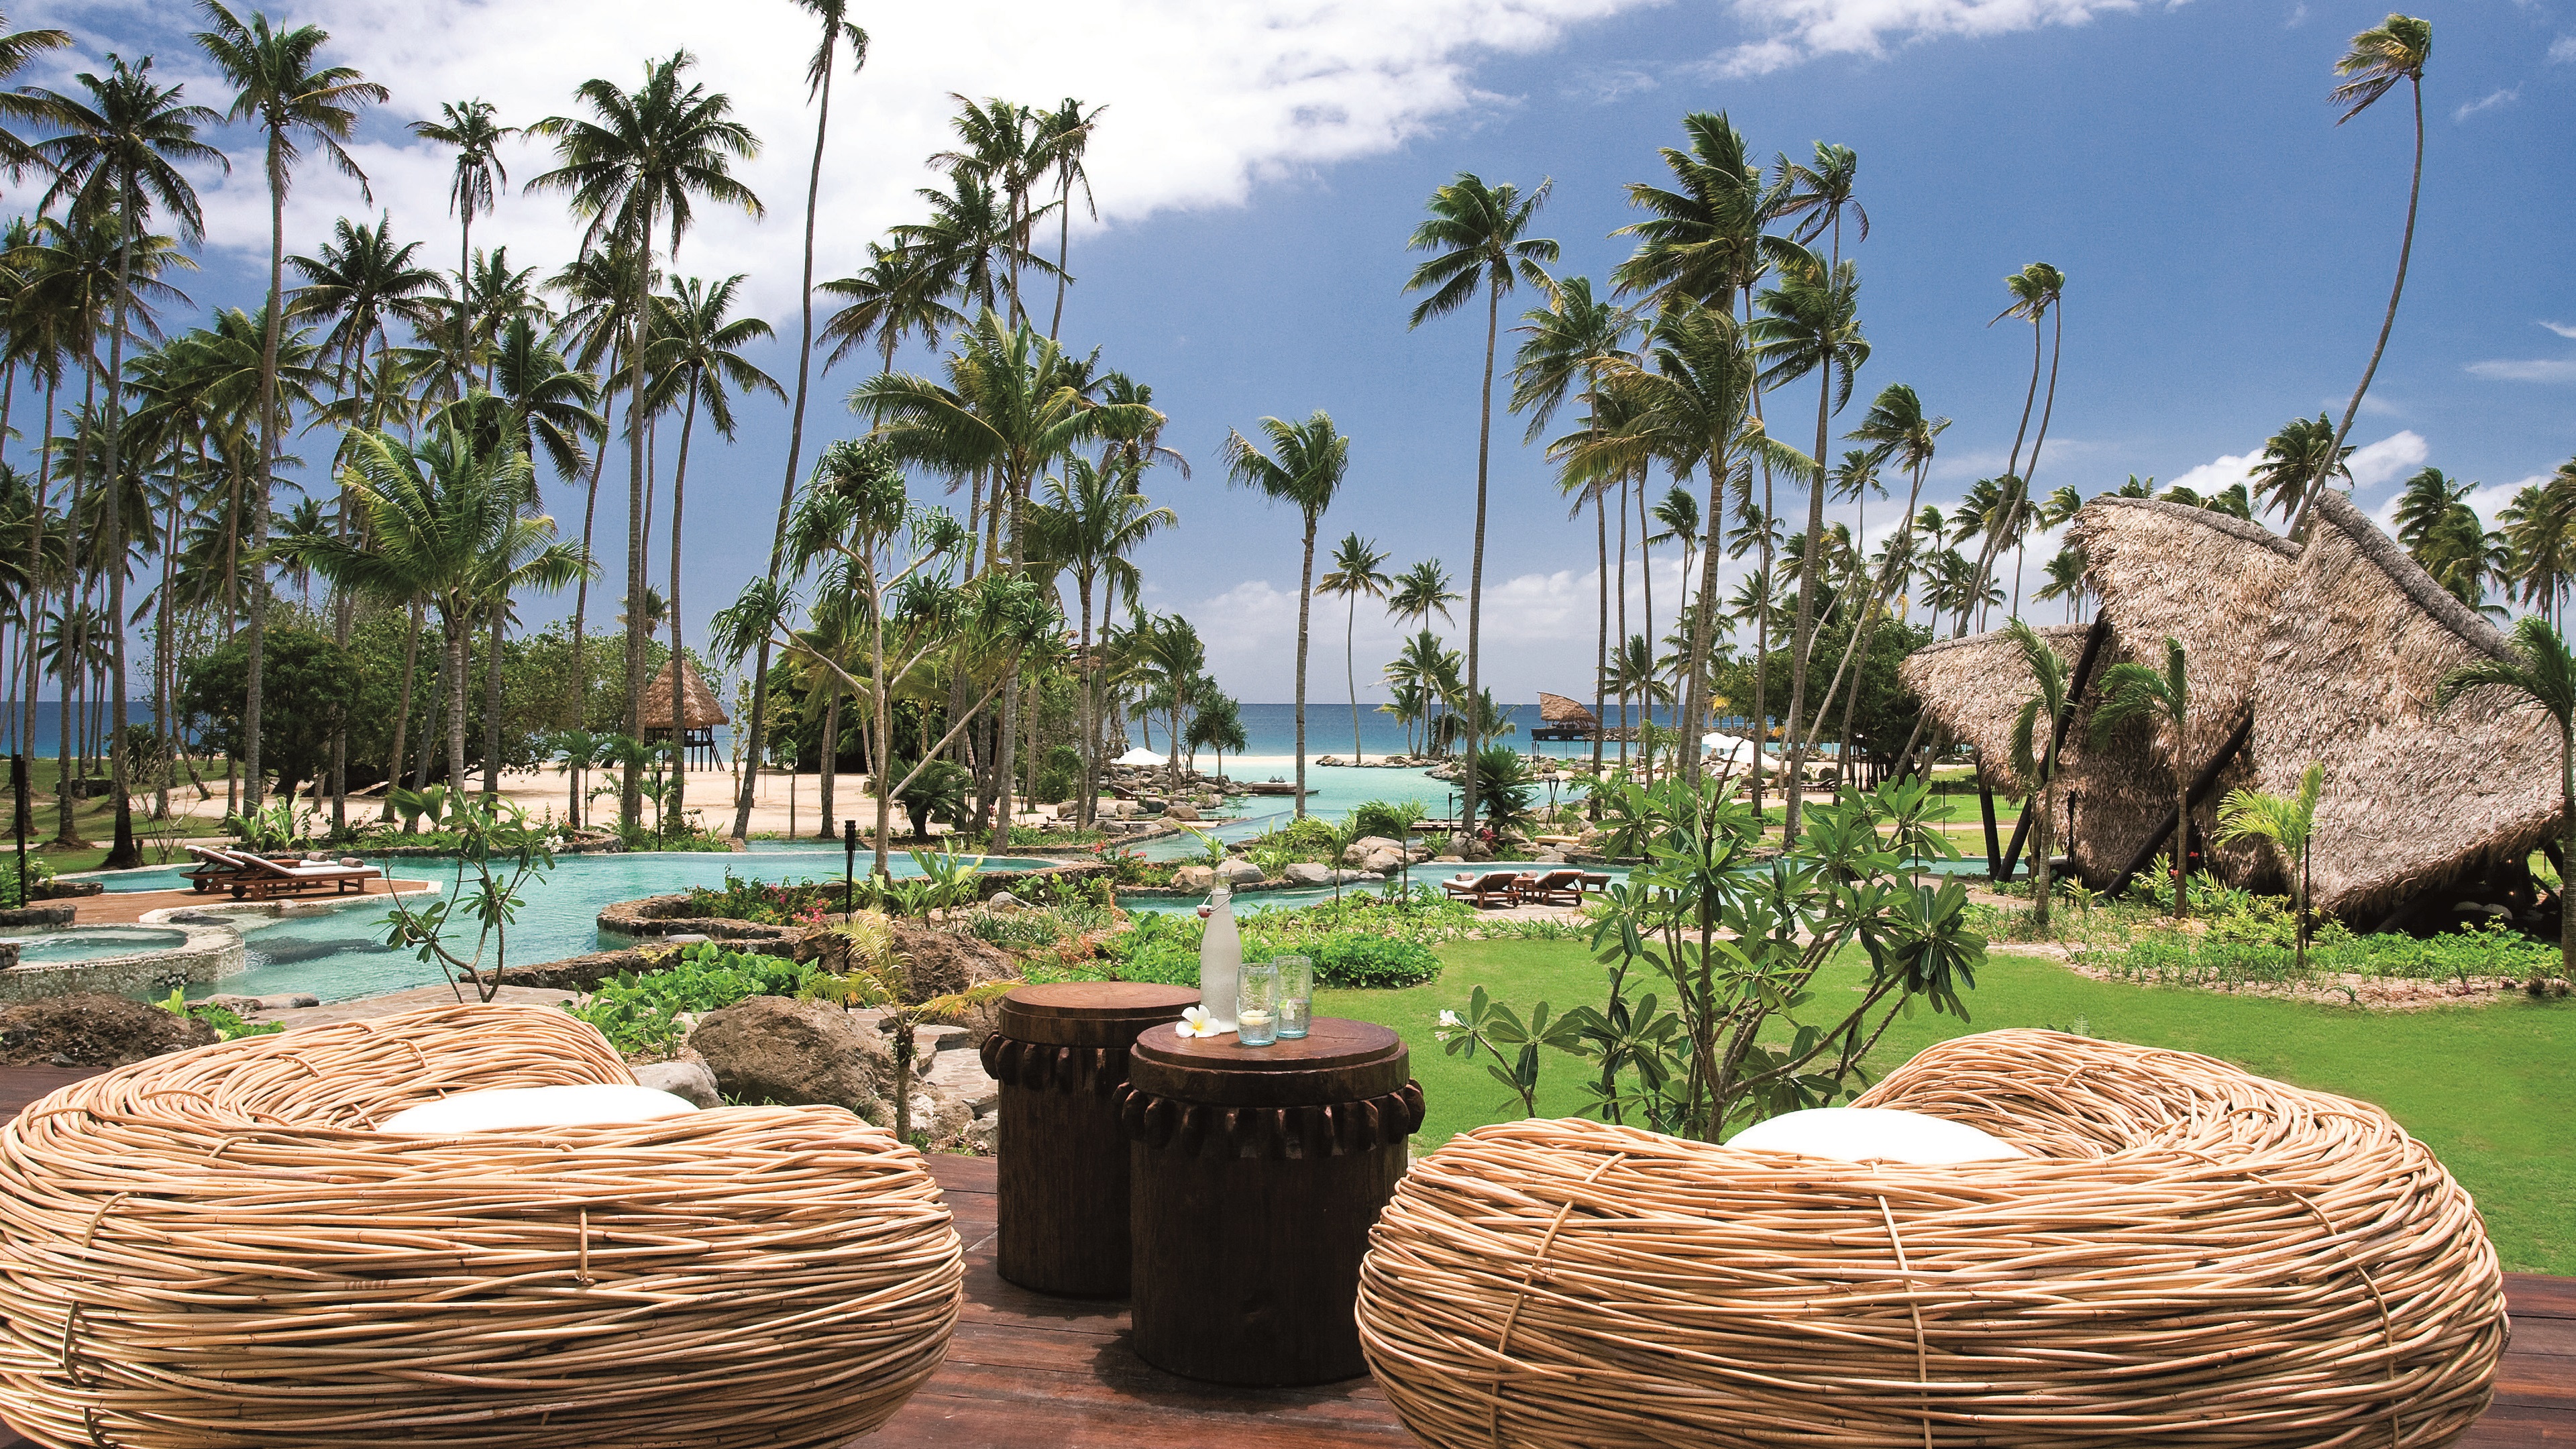 Wallpaper Resort, sea, palm trees, pool, Laucala Island, Fiji 3840x2160 UHD 4K Picture, Image